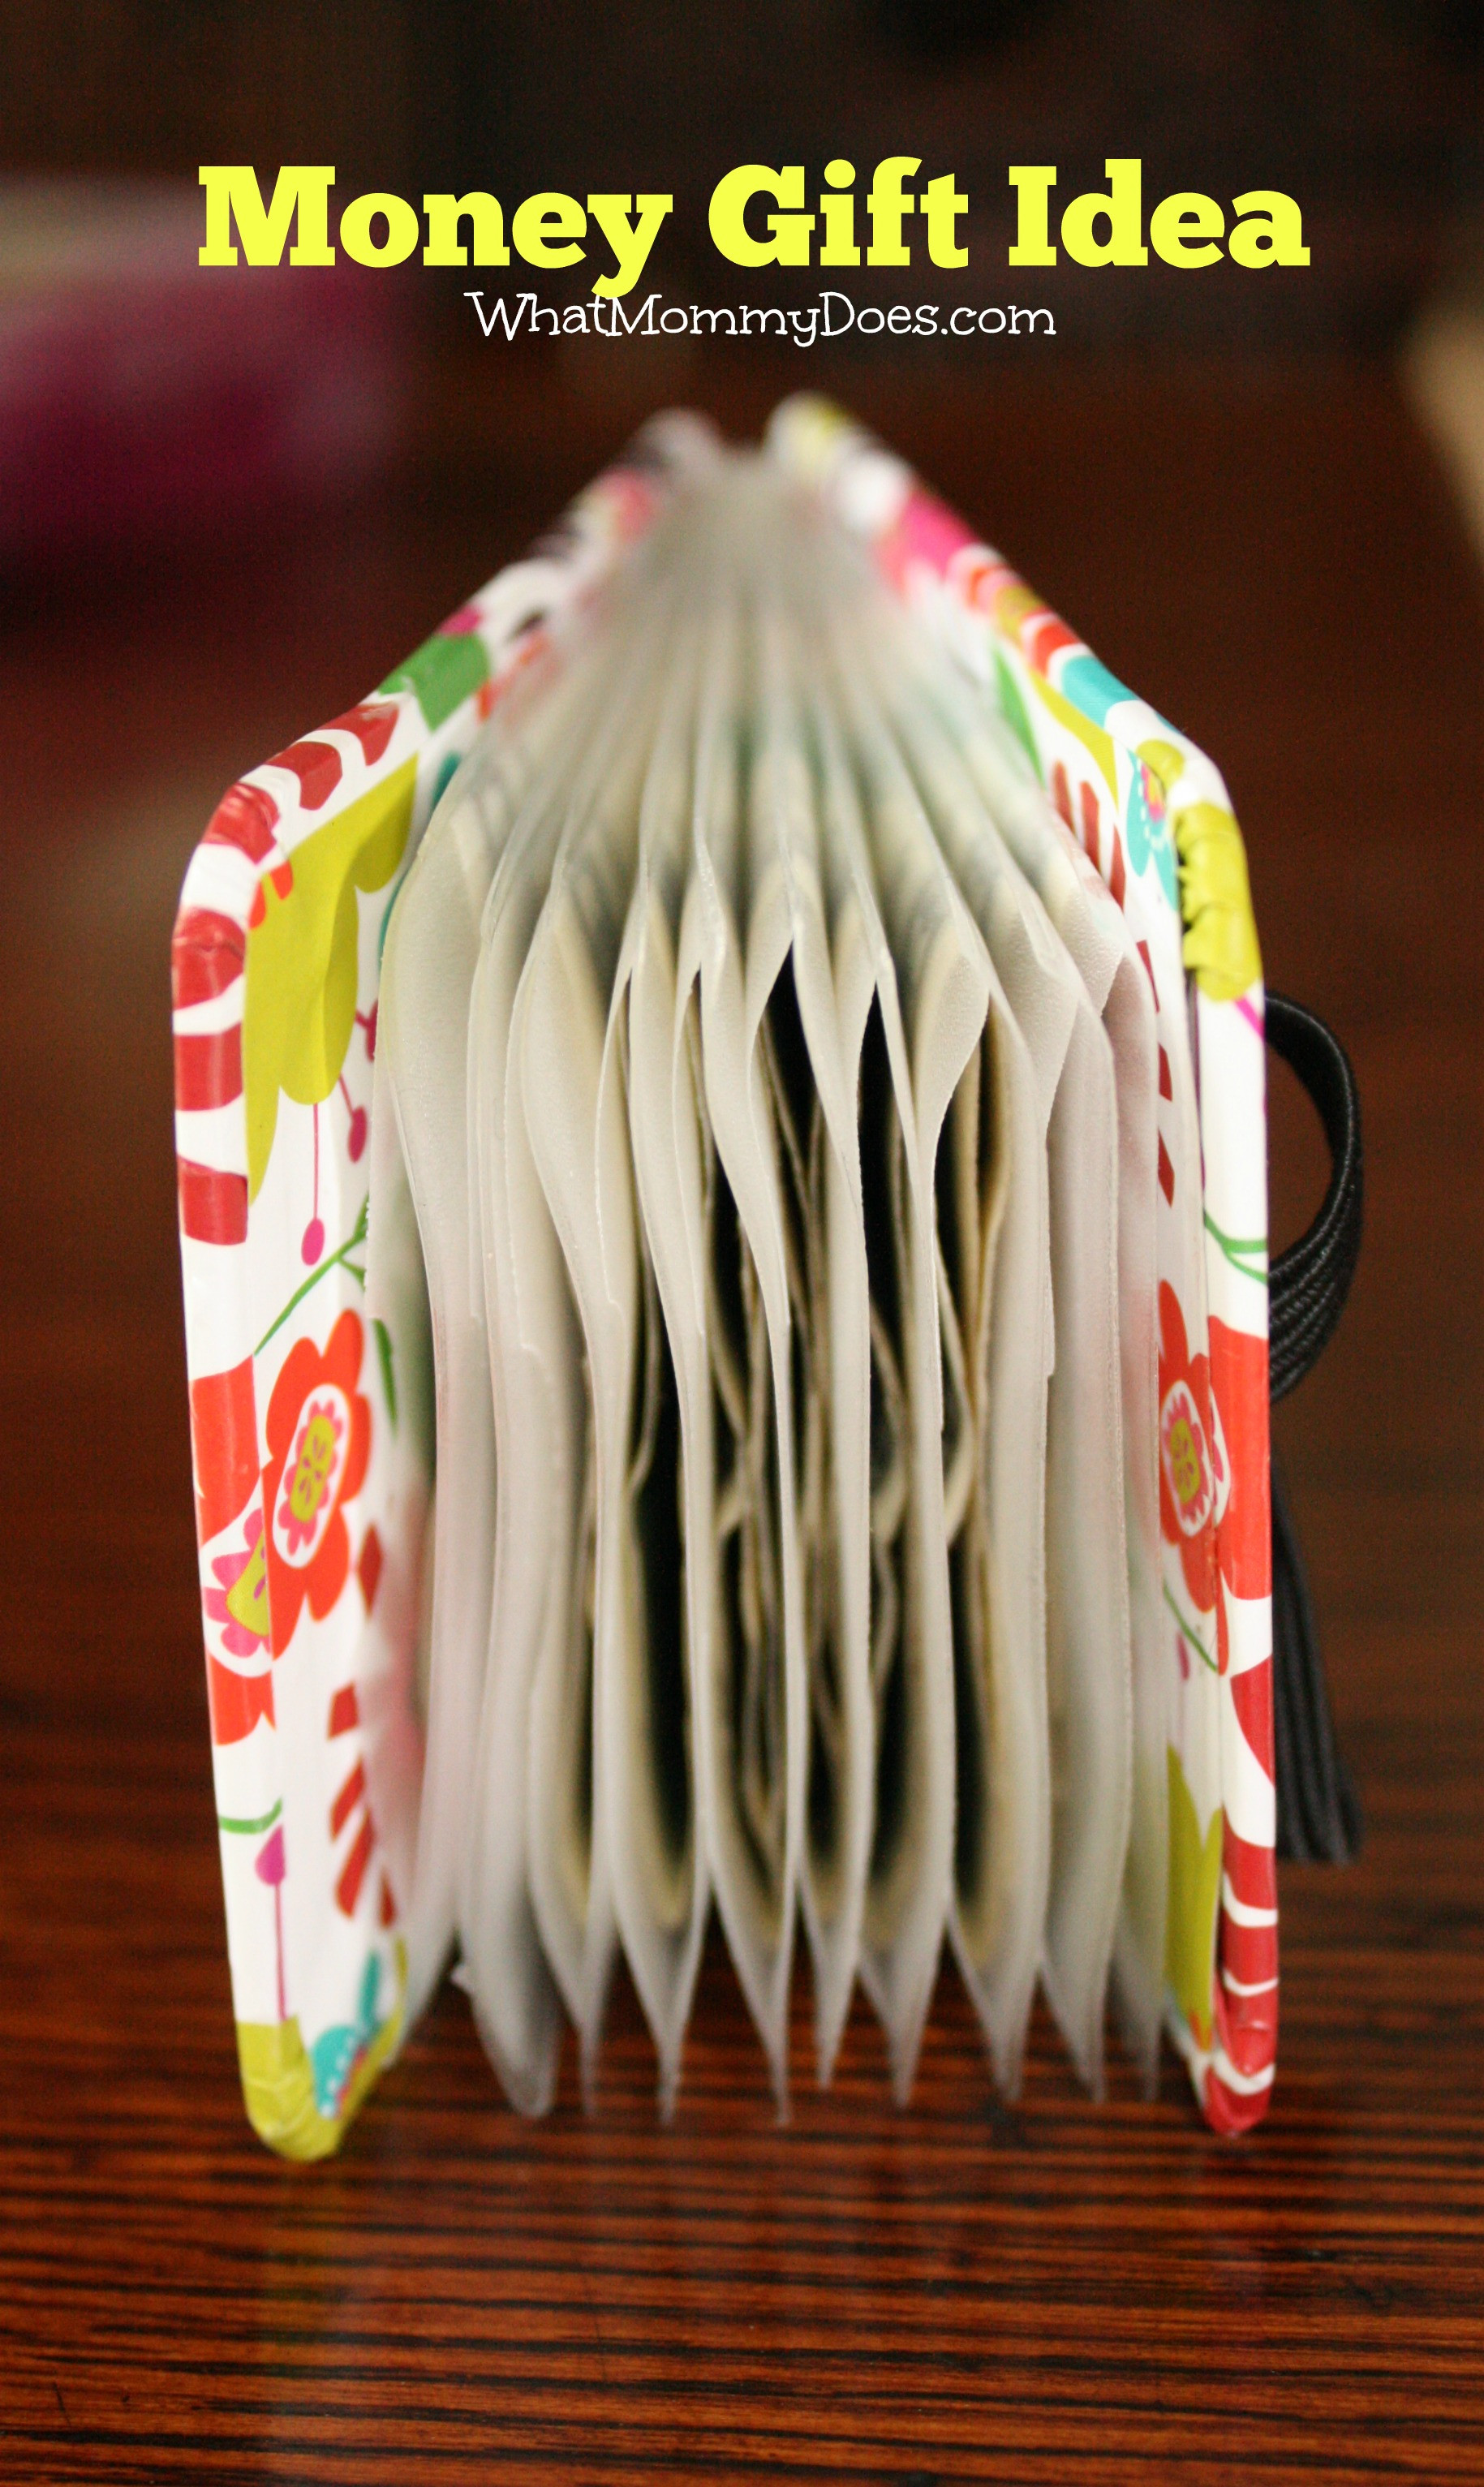 Best ideas about Creative Money Gift Ideas
. Save or Pin 7 Creative Money Gift Ideas What Mommy Does Now.